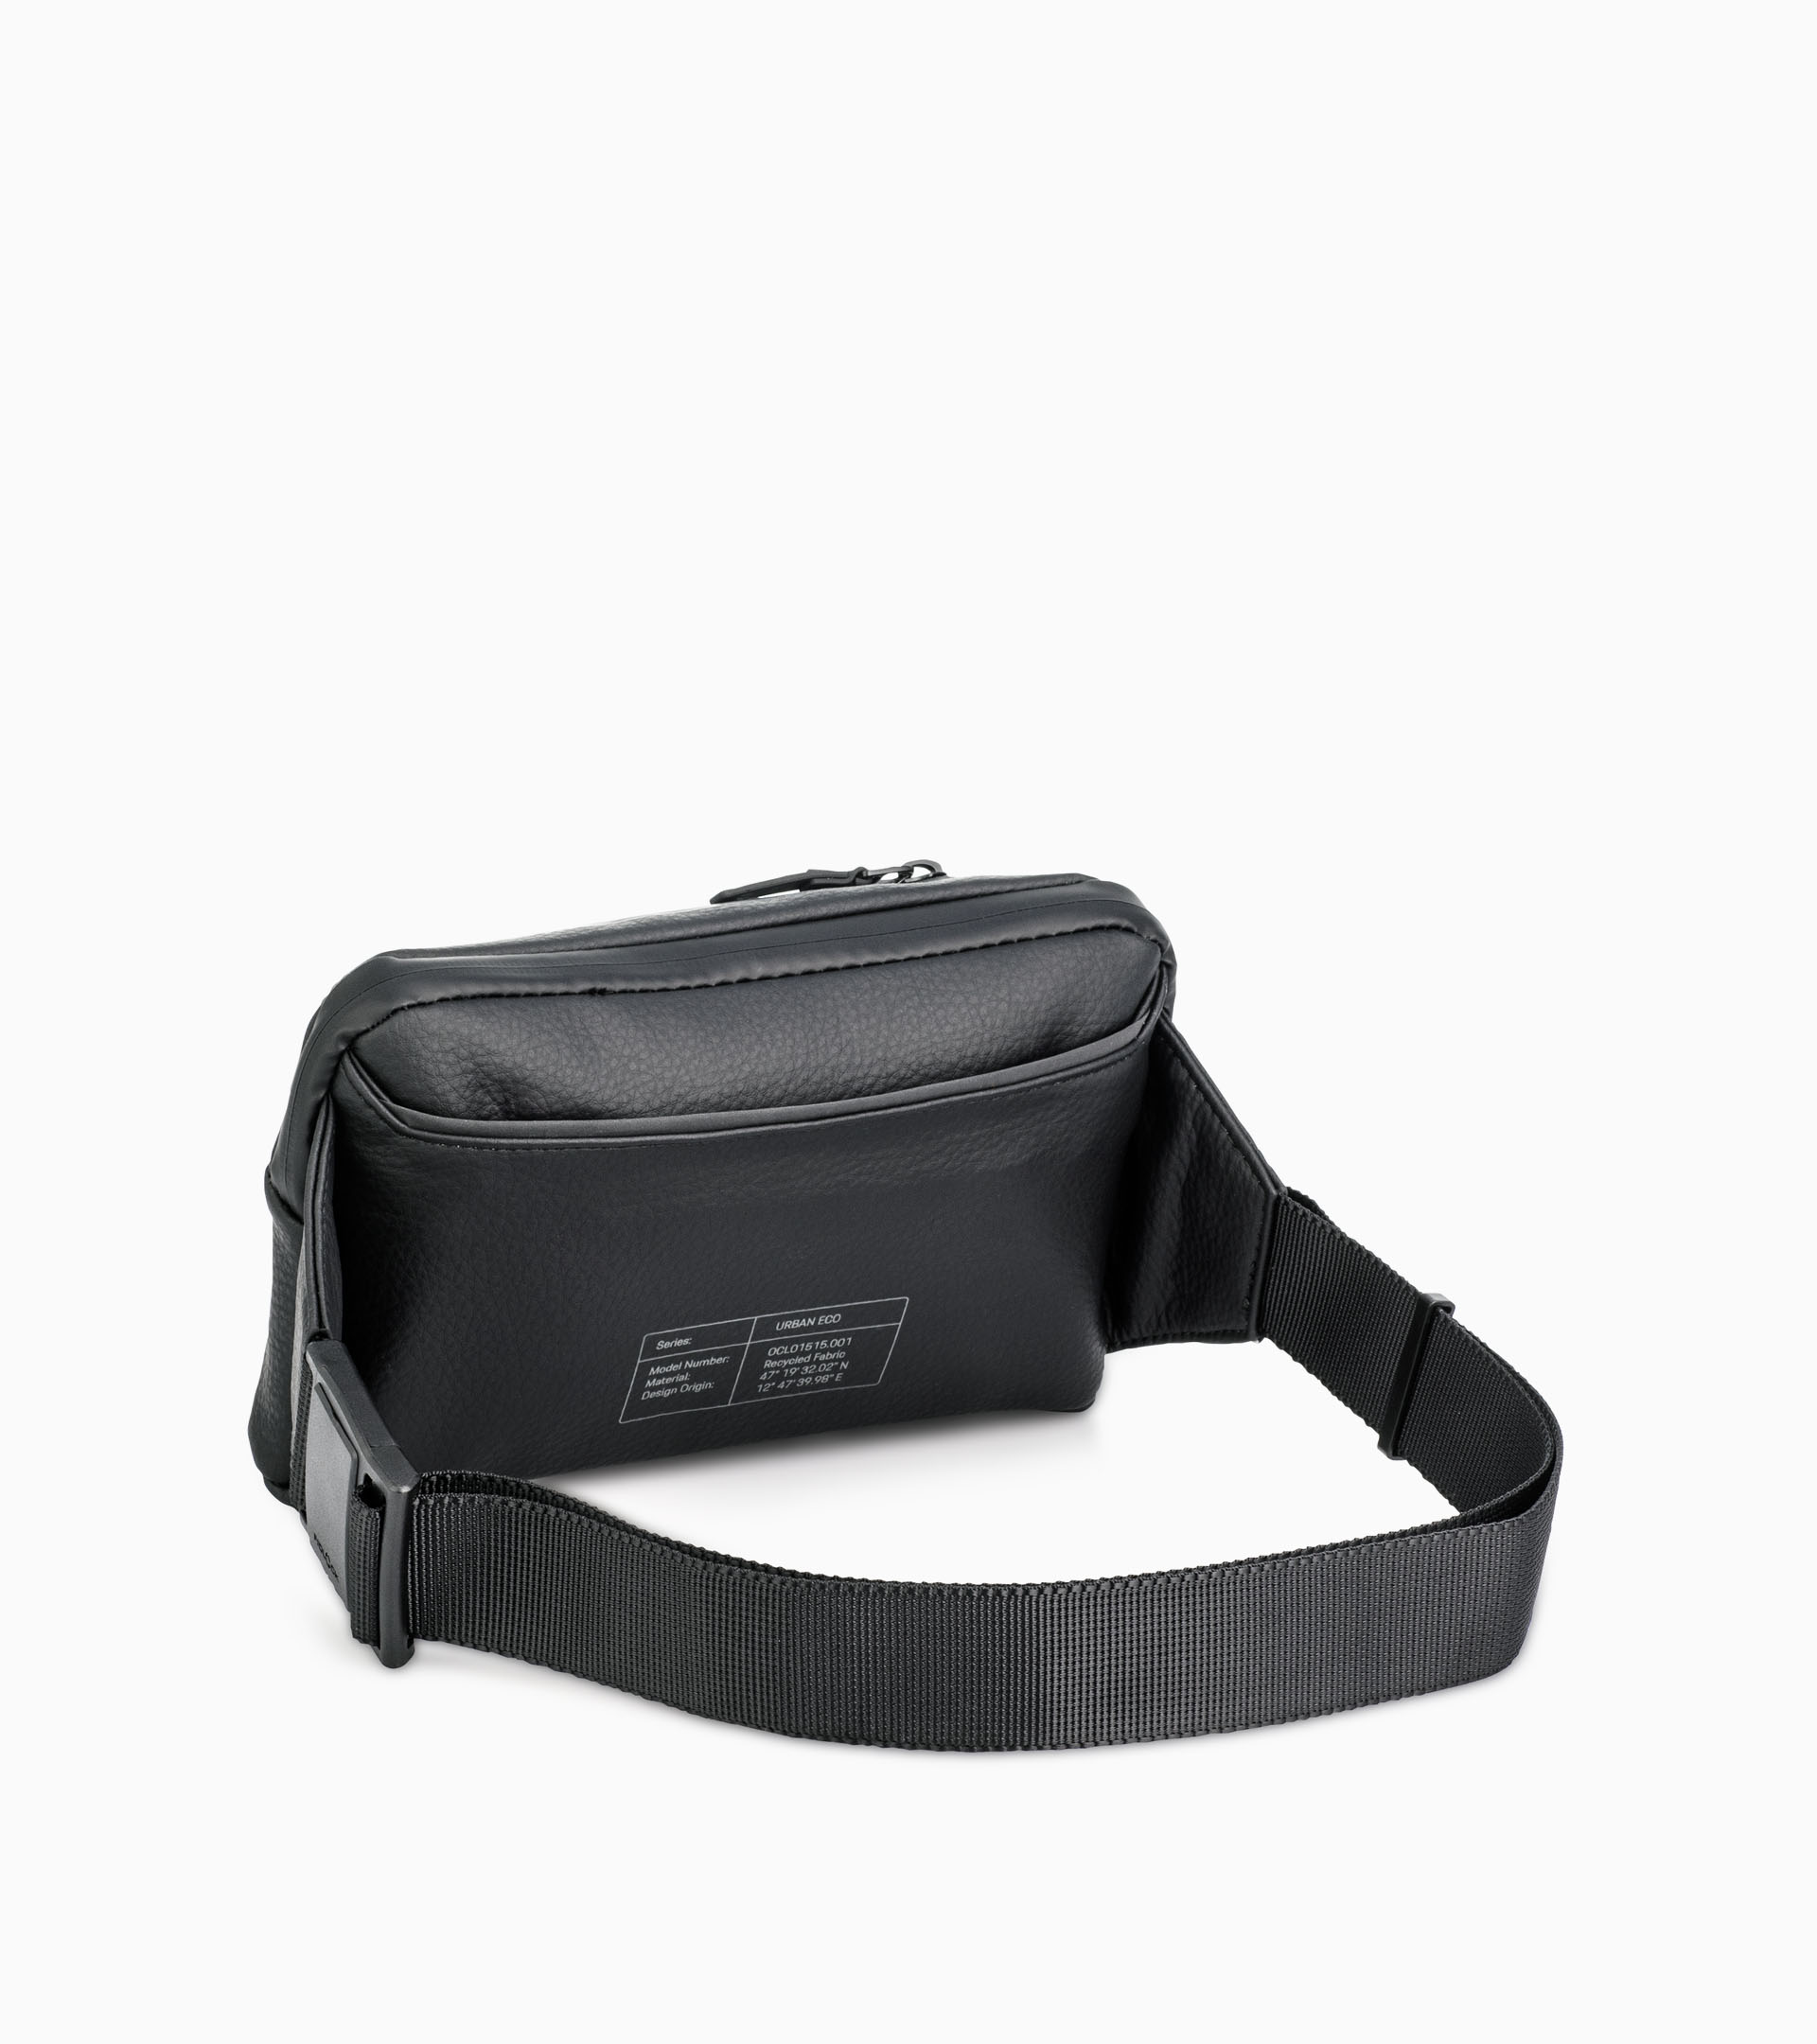 Urban Eco RL Belt Bag | & | Porsche Design Design Porsche Comfortable Practical Men\'s - - Bag black Shoulder